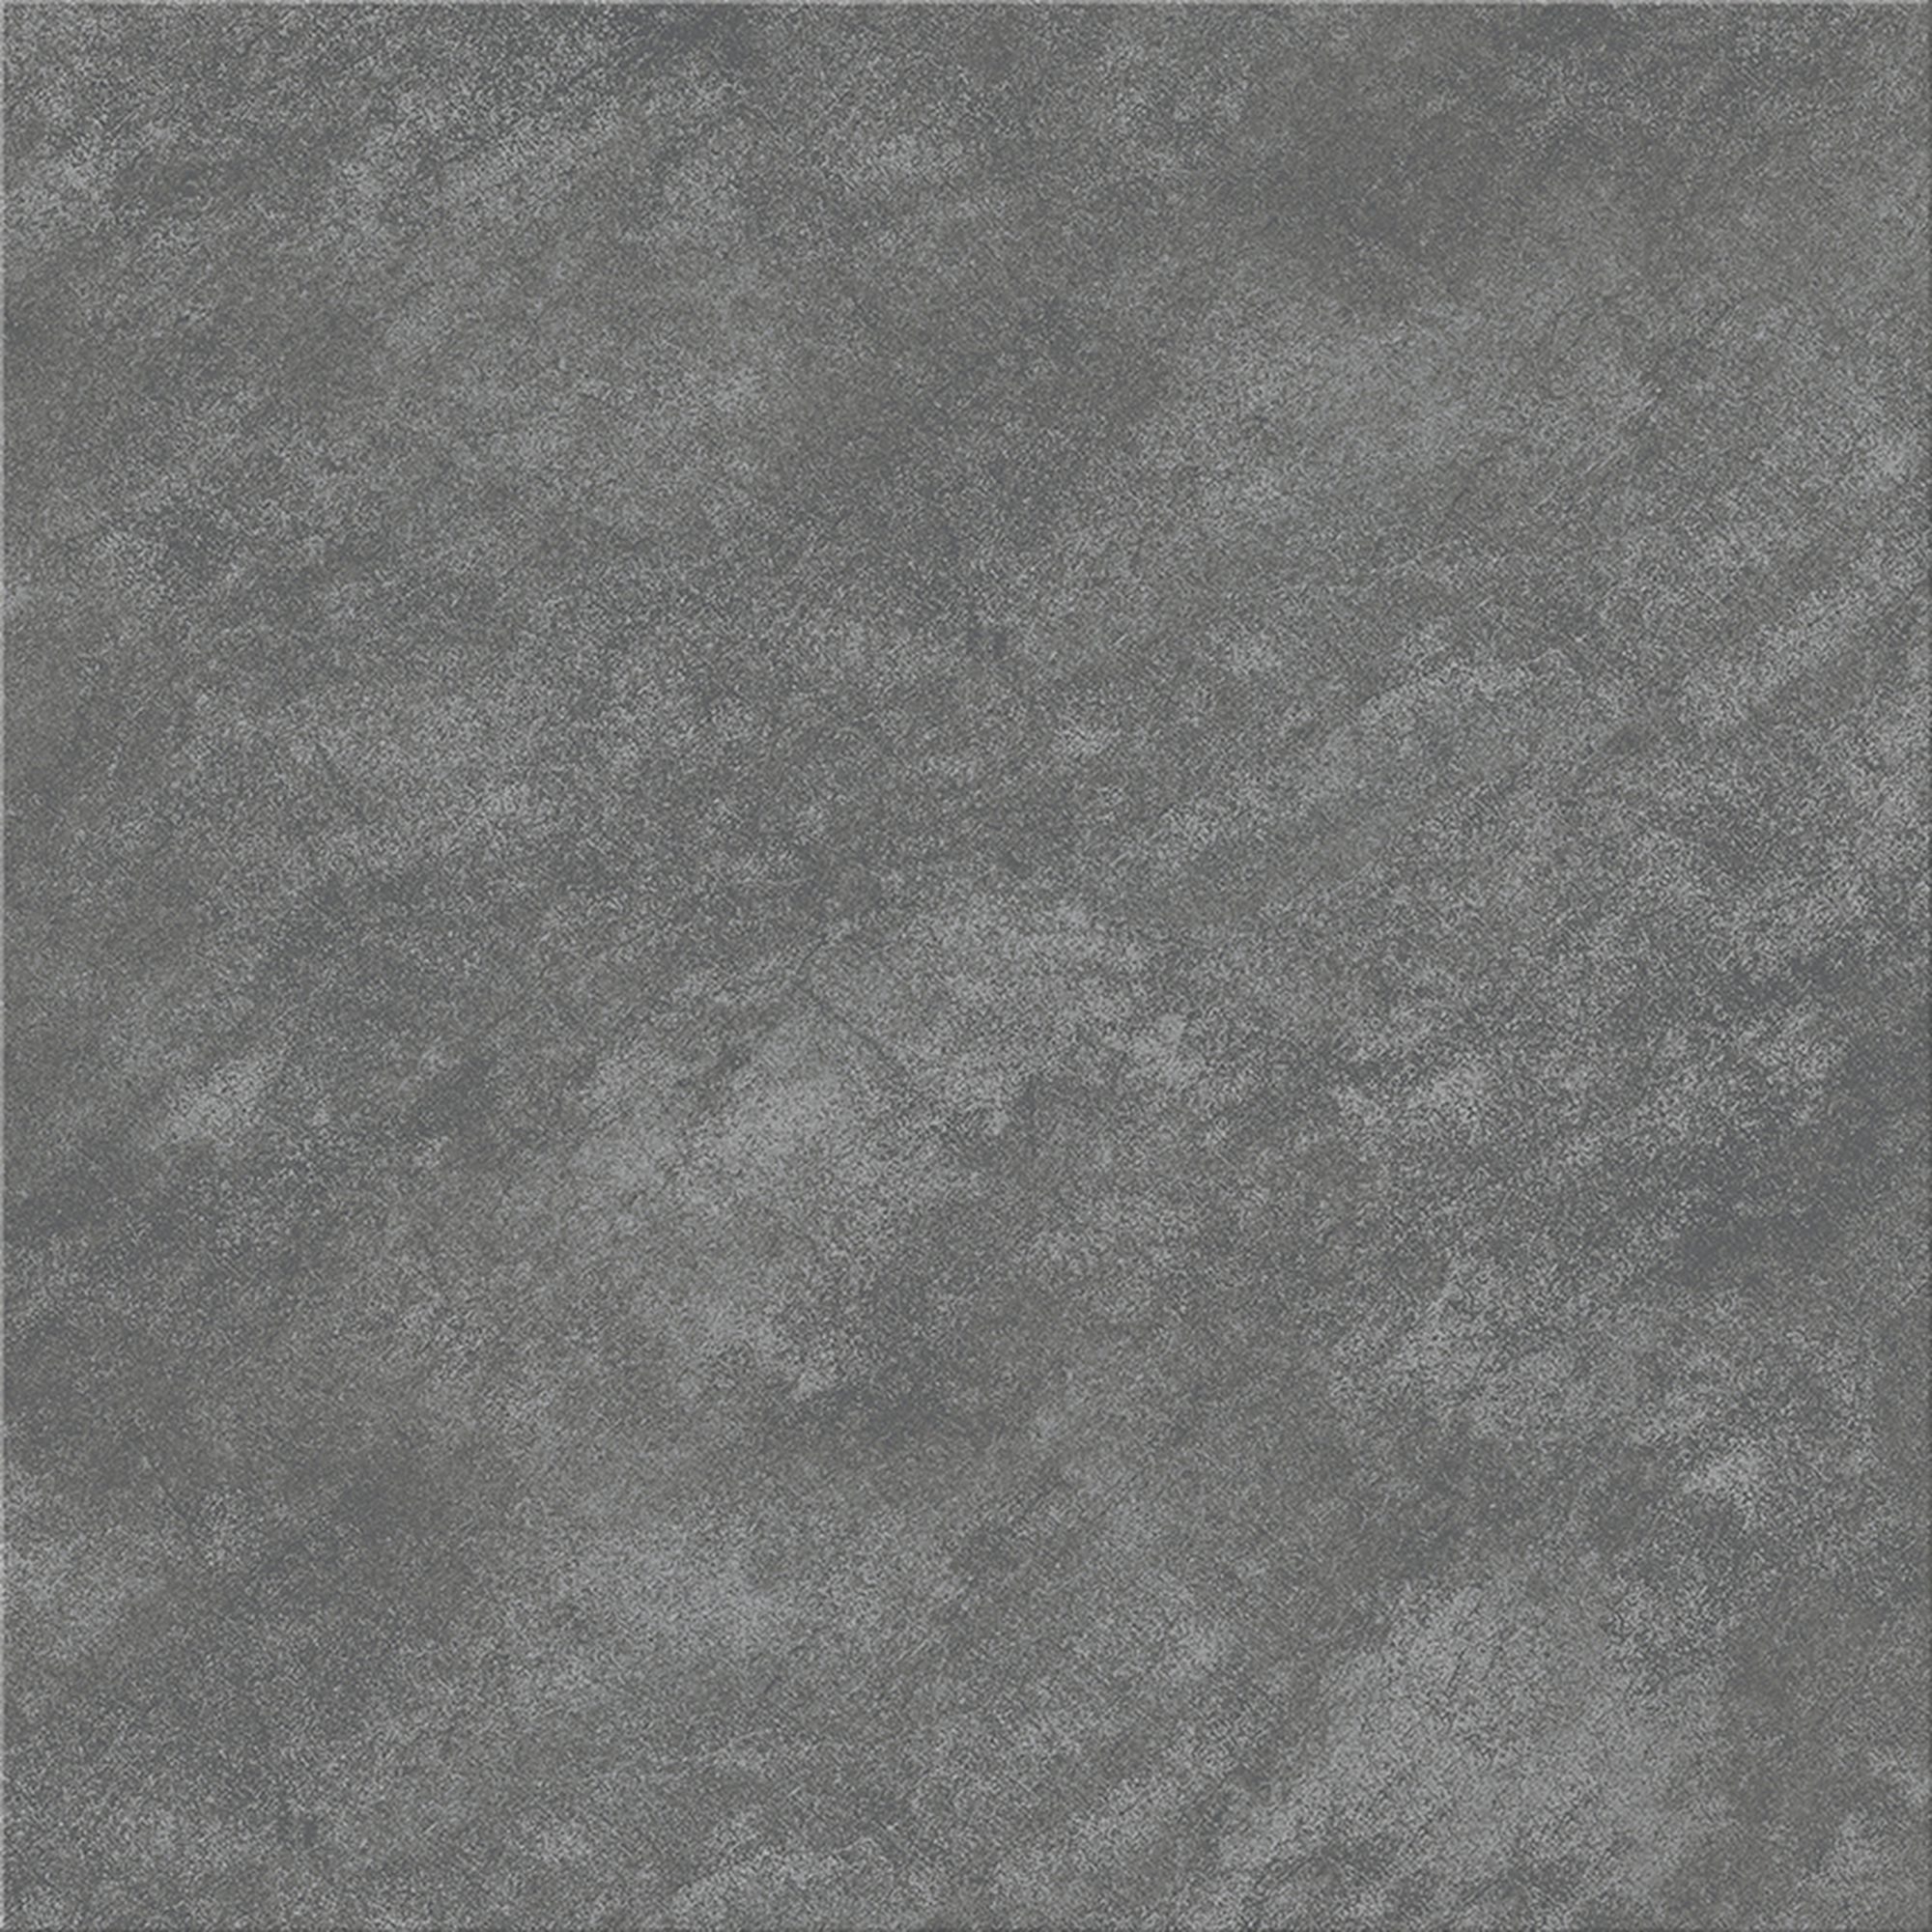 Außenfliese 'Atakama' grau 59,3 x 59,3 x 2 cm + product picture